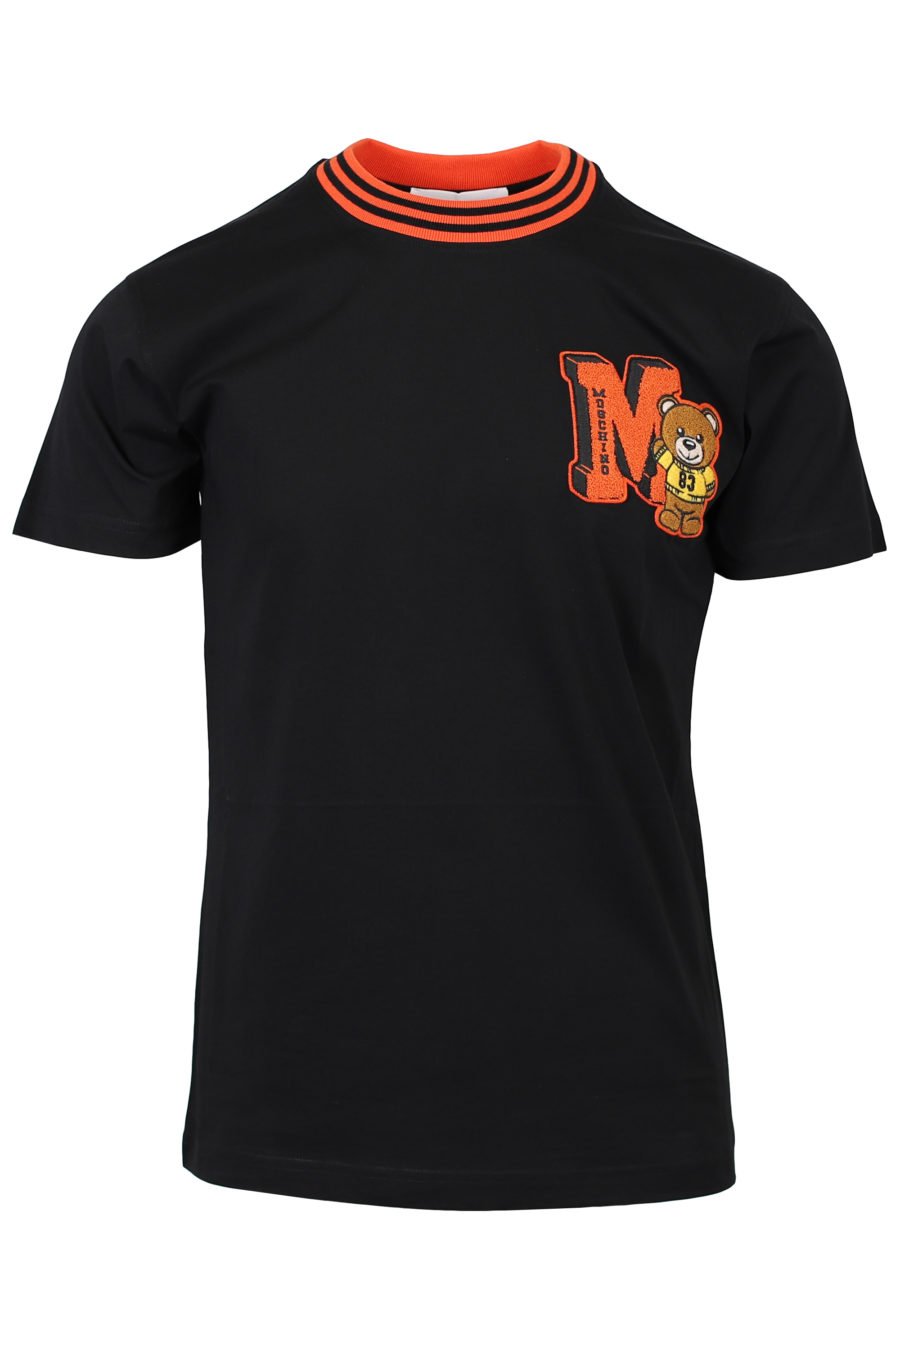 Schwarzes T-Shirt mit Teddybär - IMG 2042